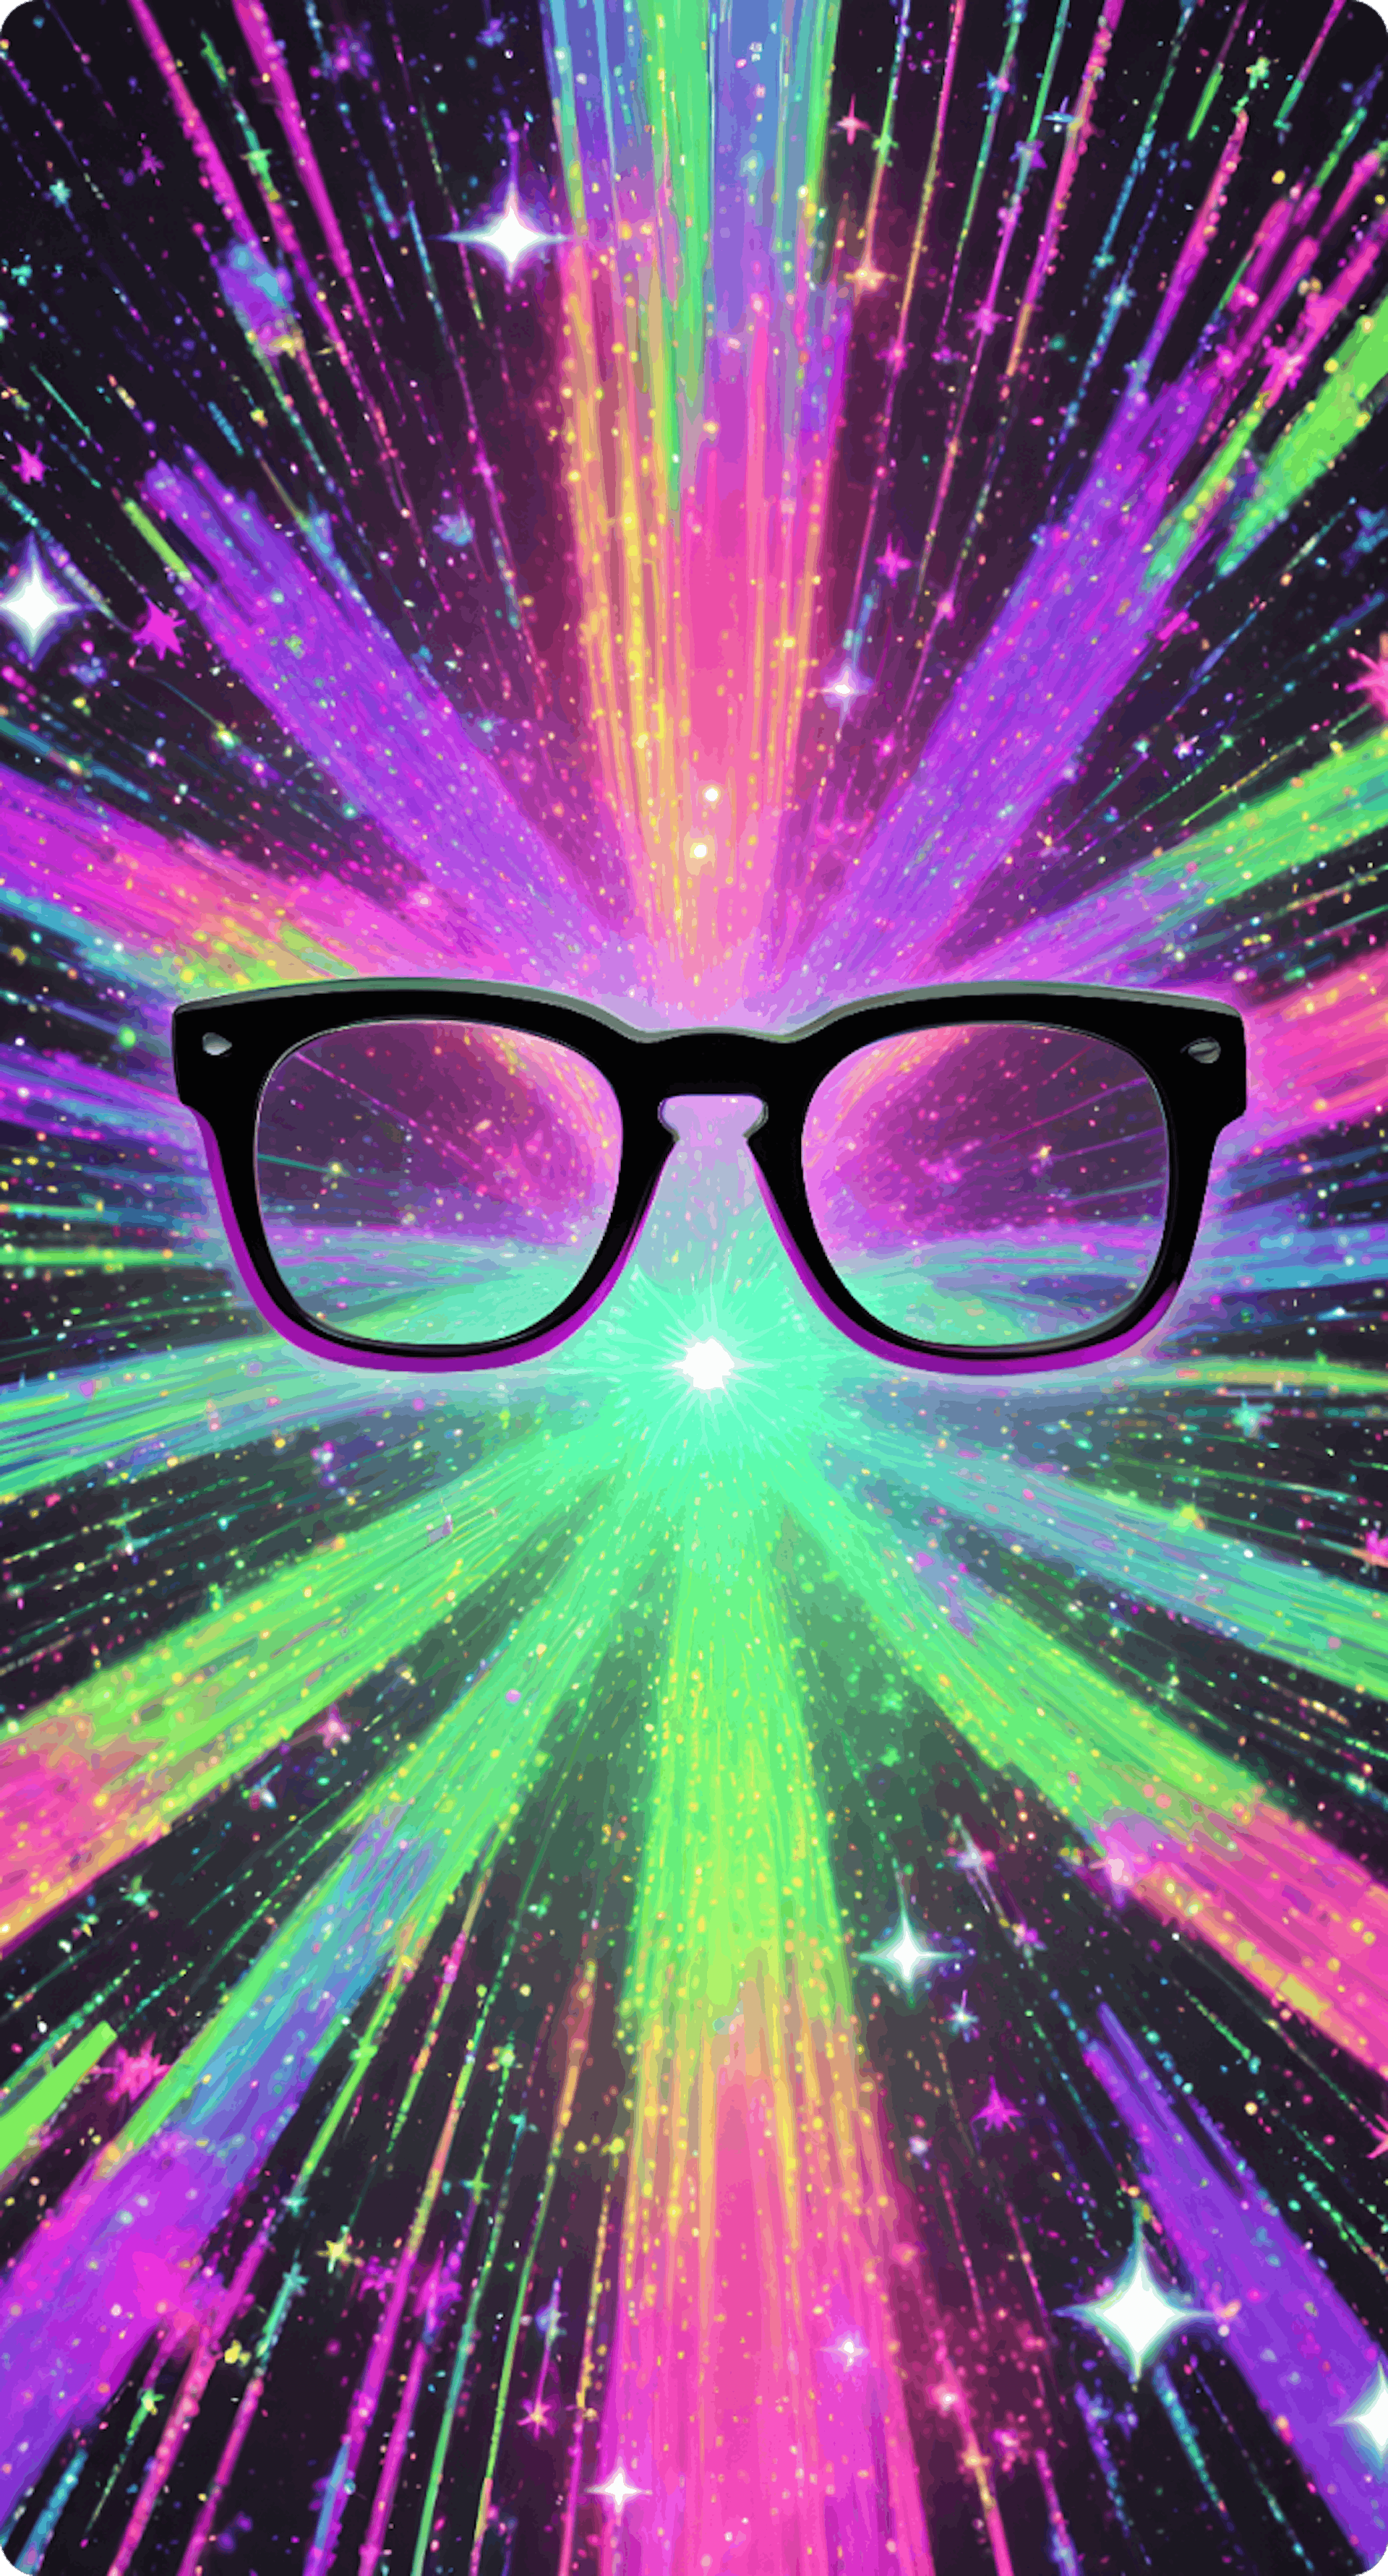 Illustration of galactic glasses